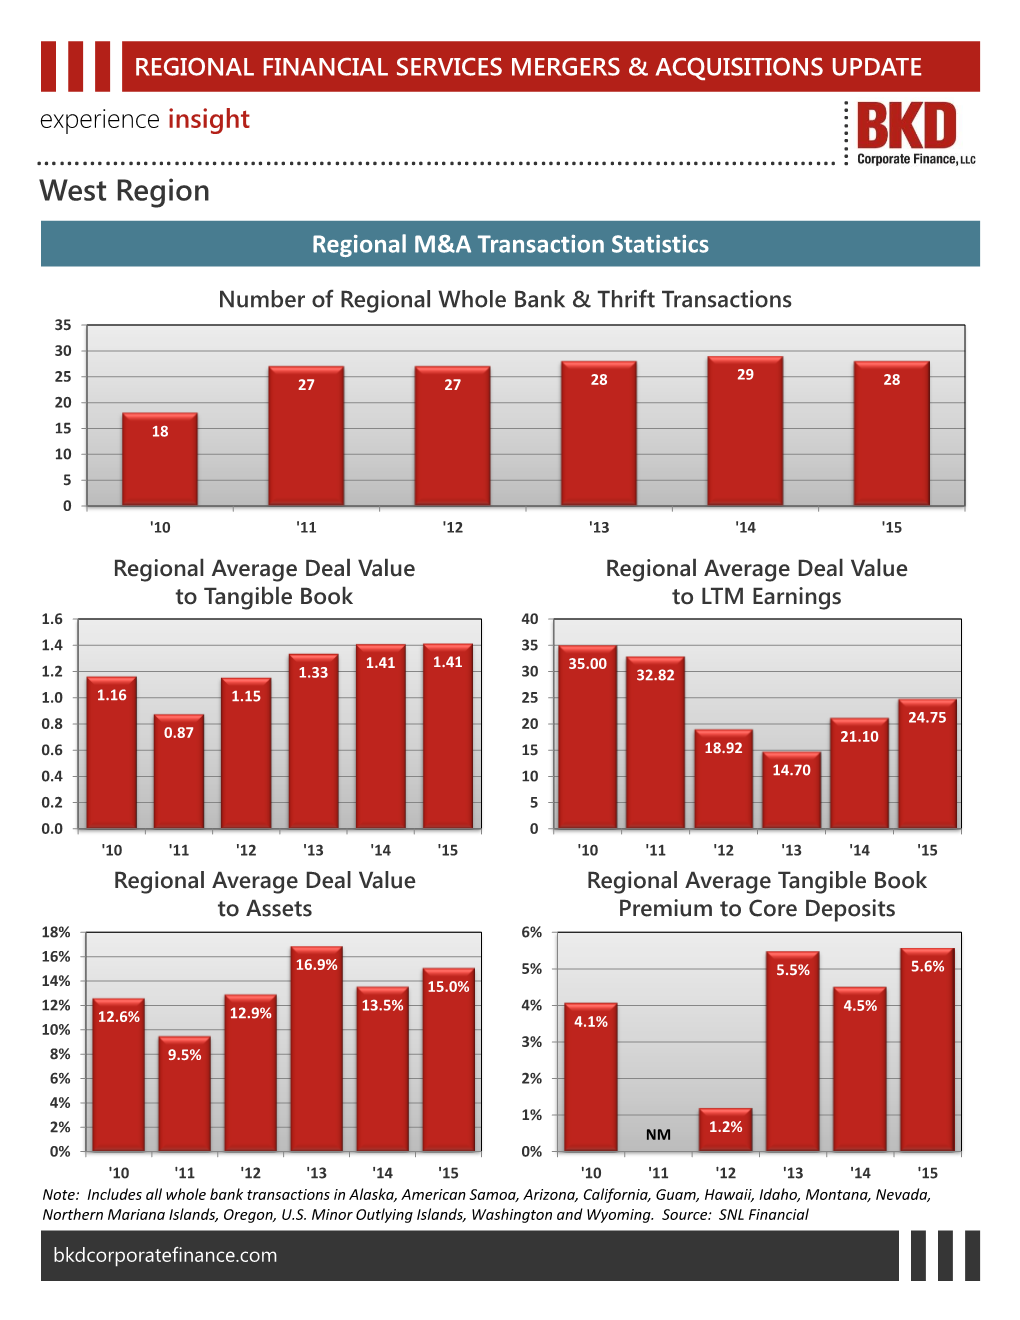 West Region Regional M&A Transaction Statistics